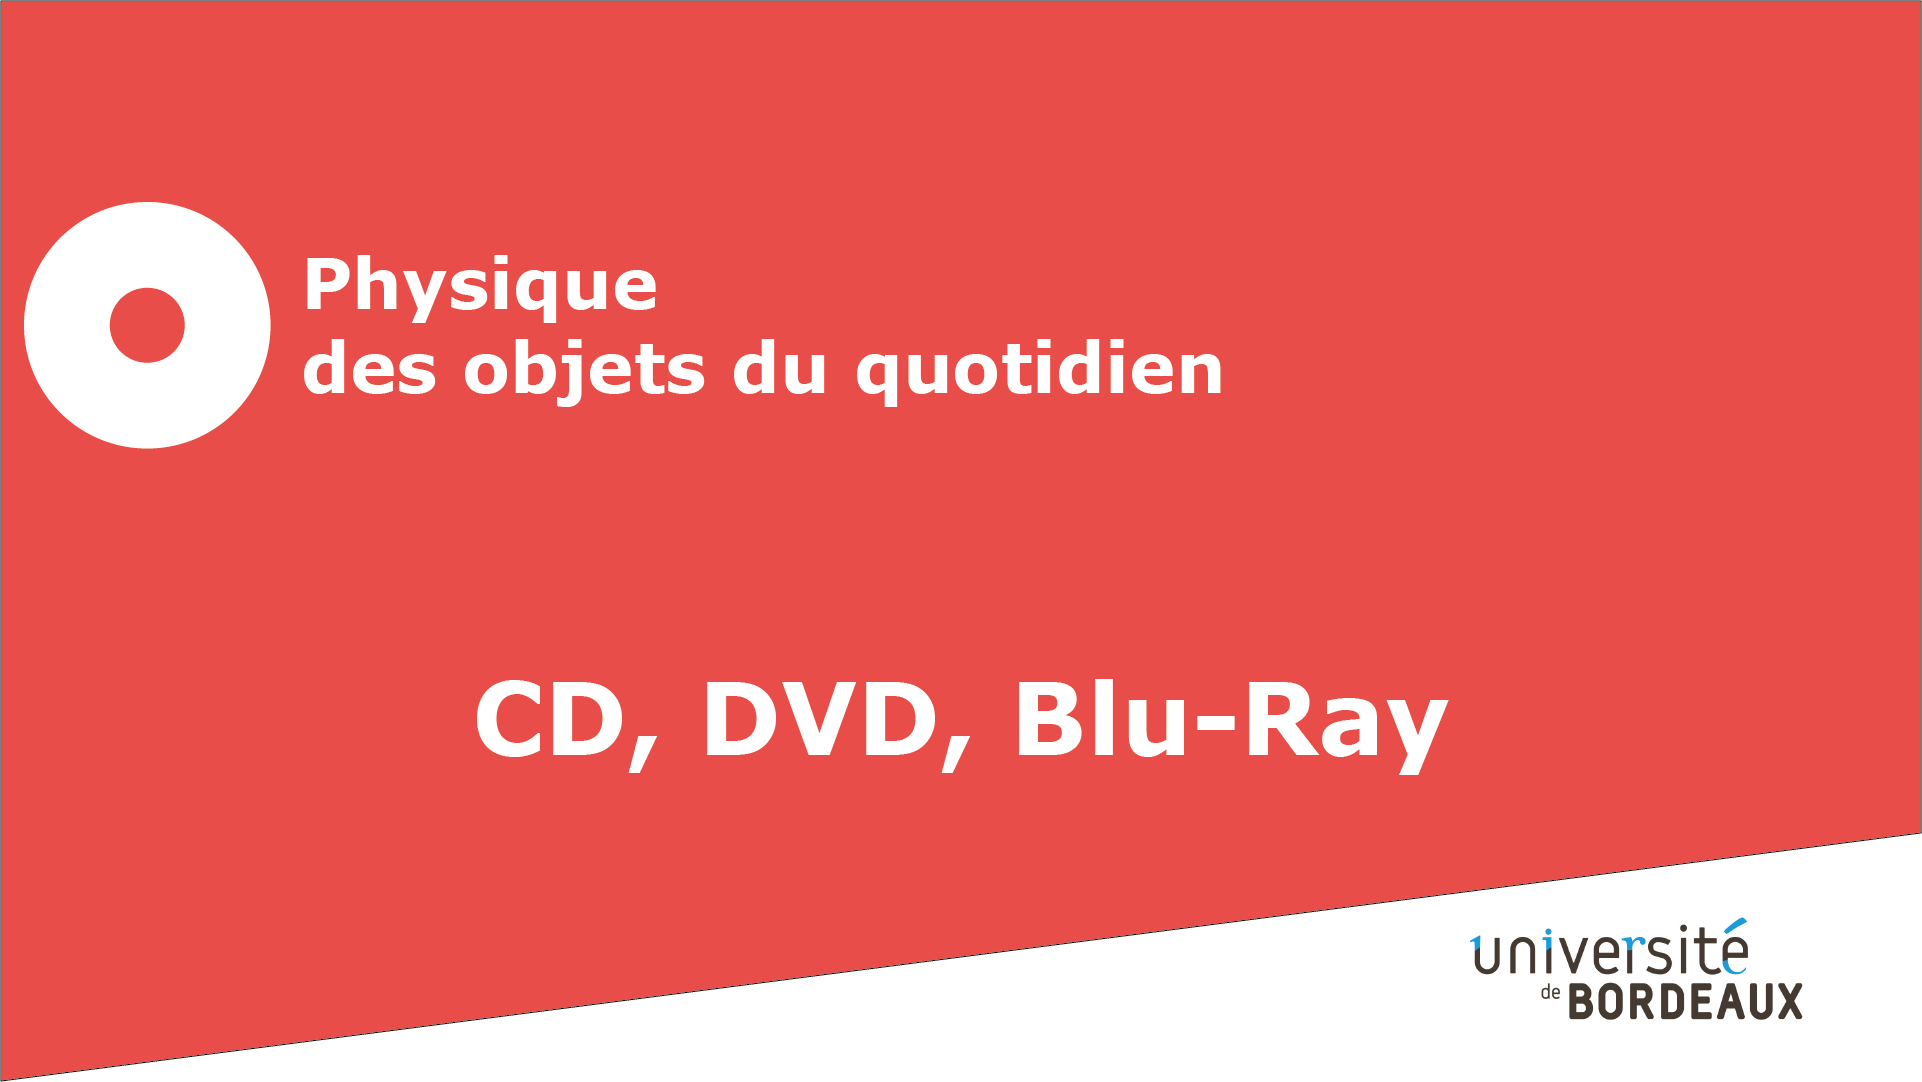 14 - CD, DVD, Blu-ray / Calcul de la longueur de la spirale inscrite sur un CD (expert)